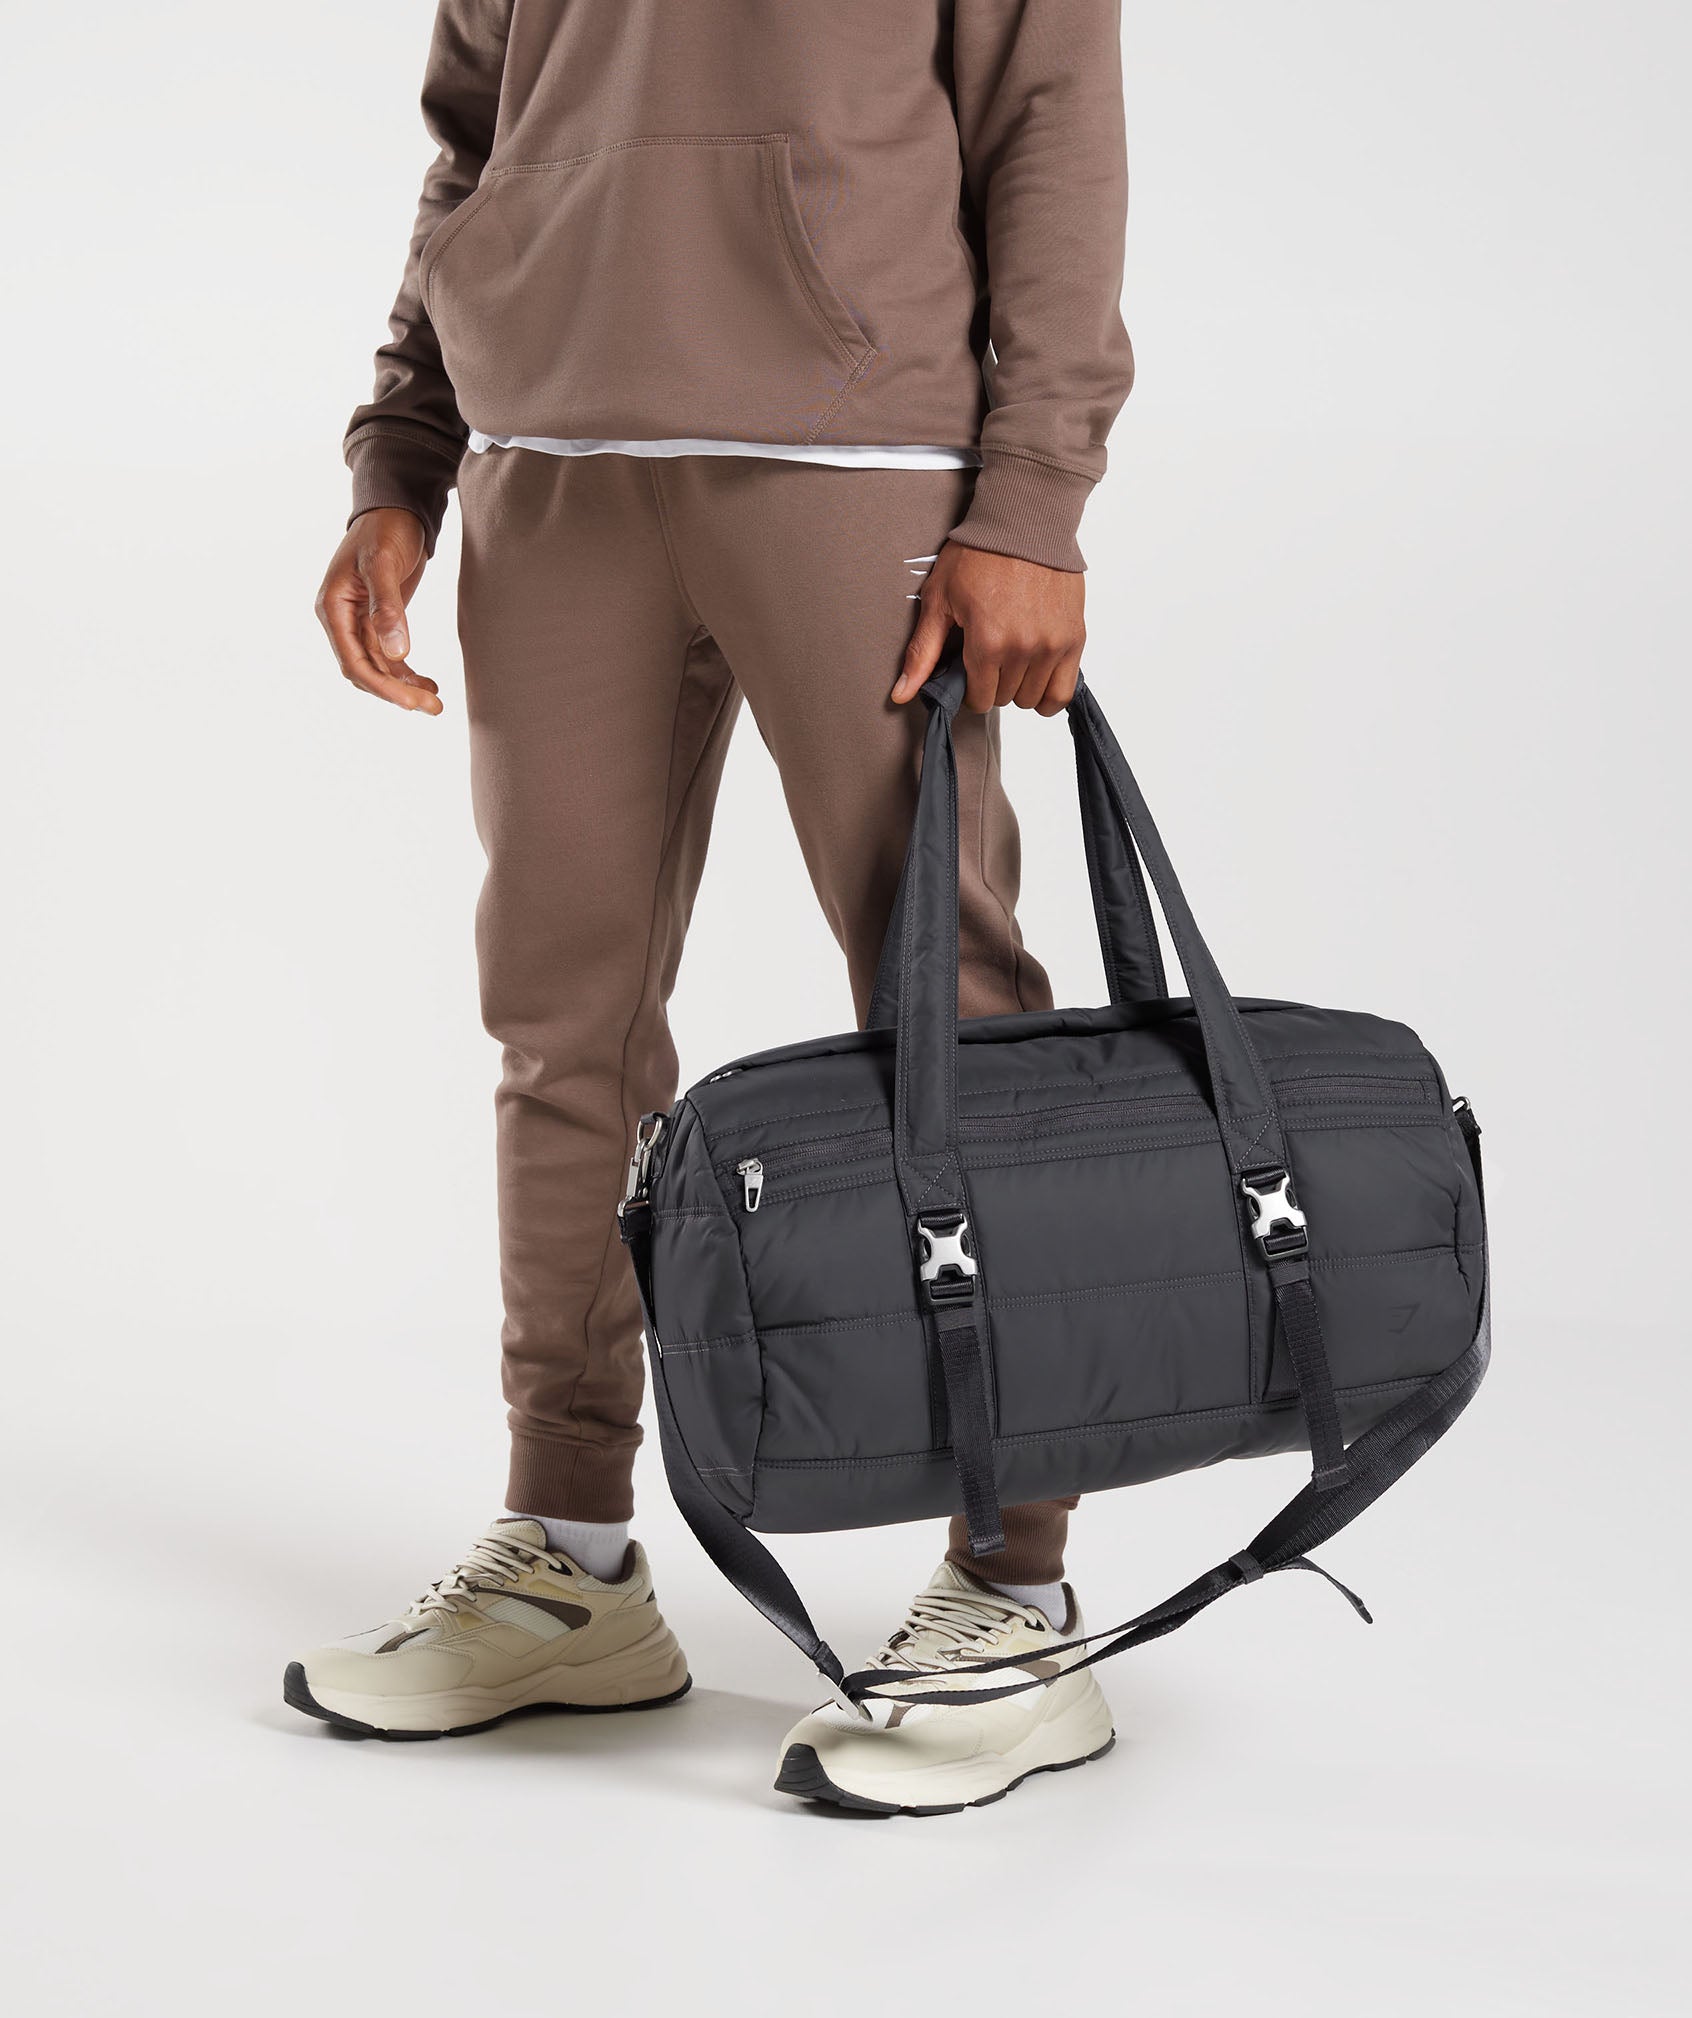 Premium Lifestyle Barrel Bag in Onyx Grey